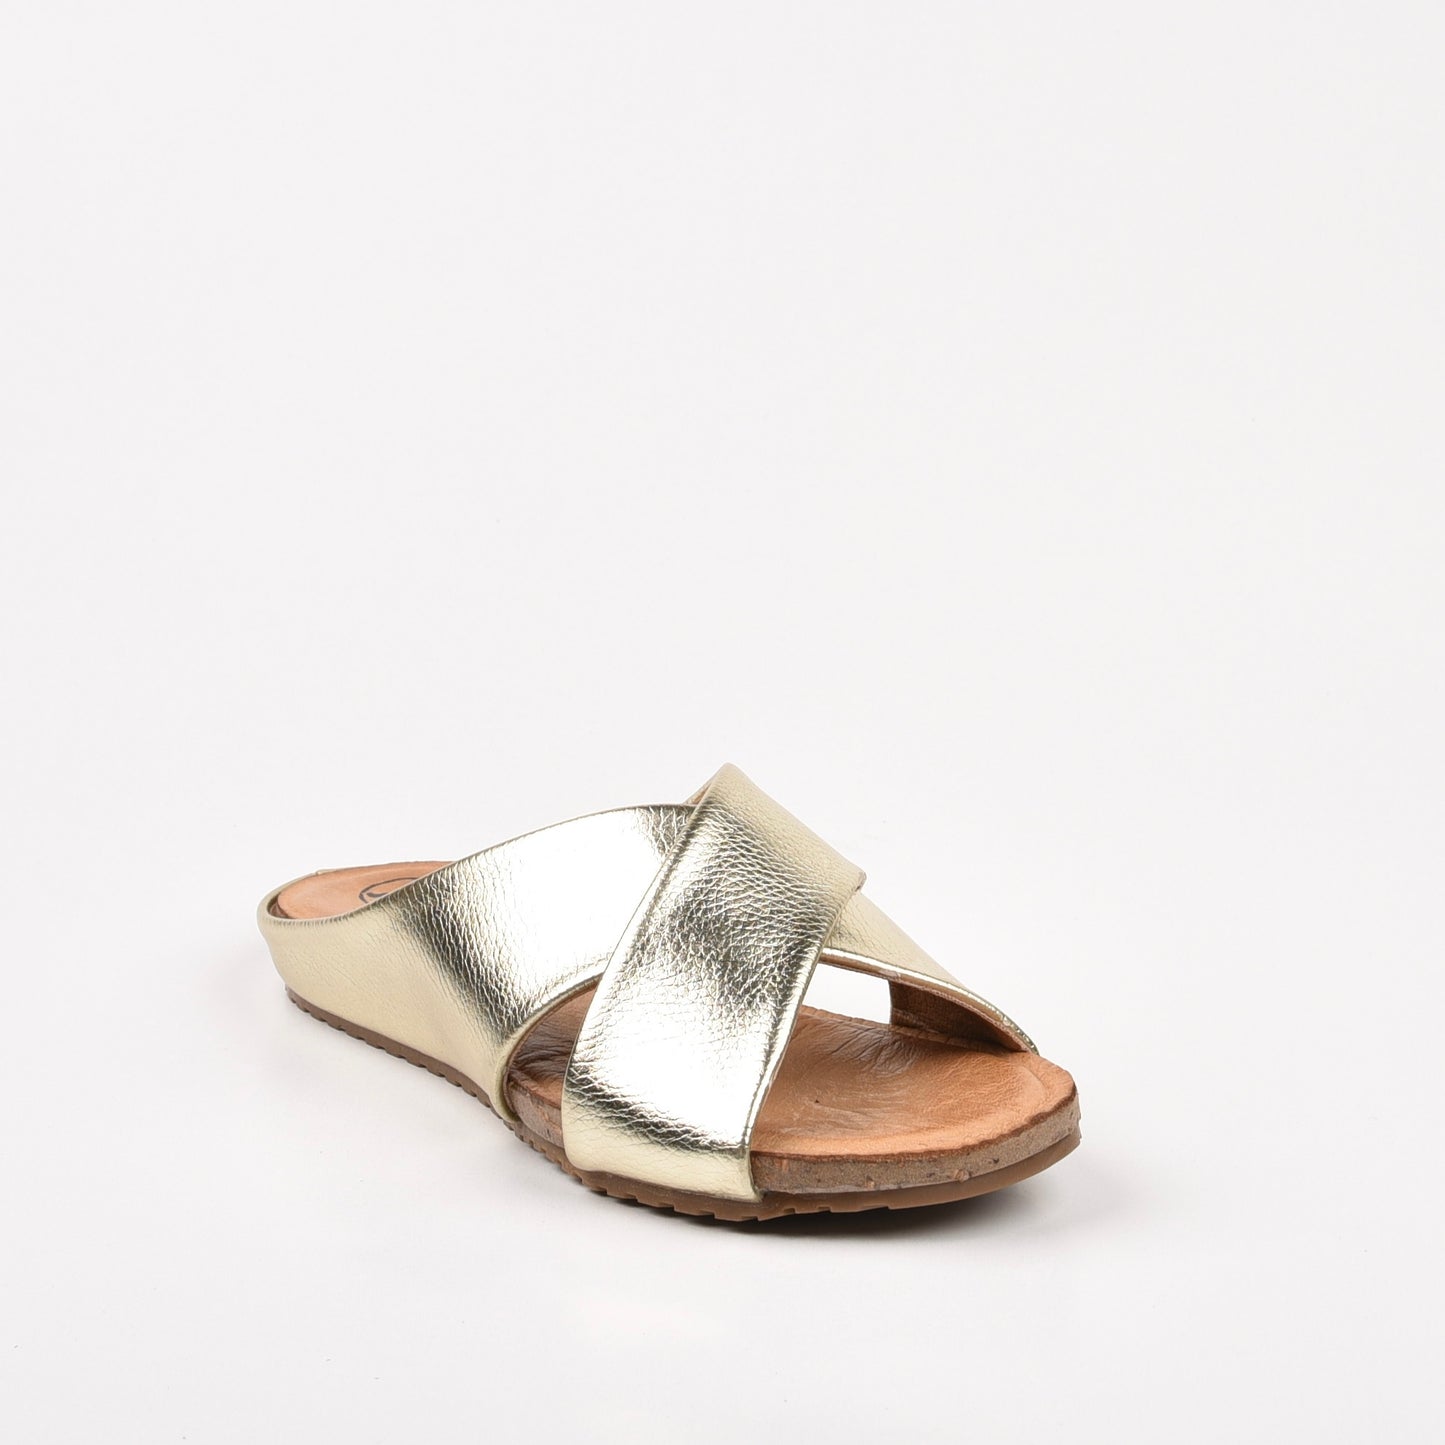 Shalapi slippers for women in gold